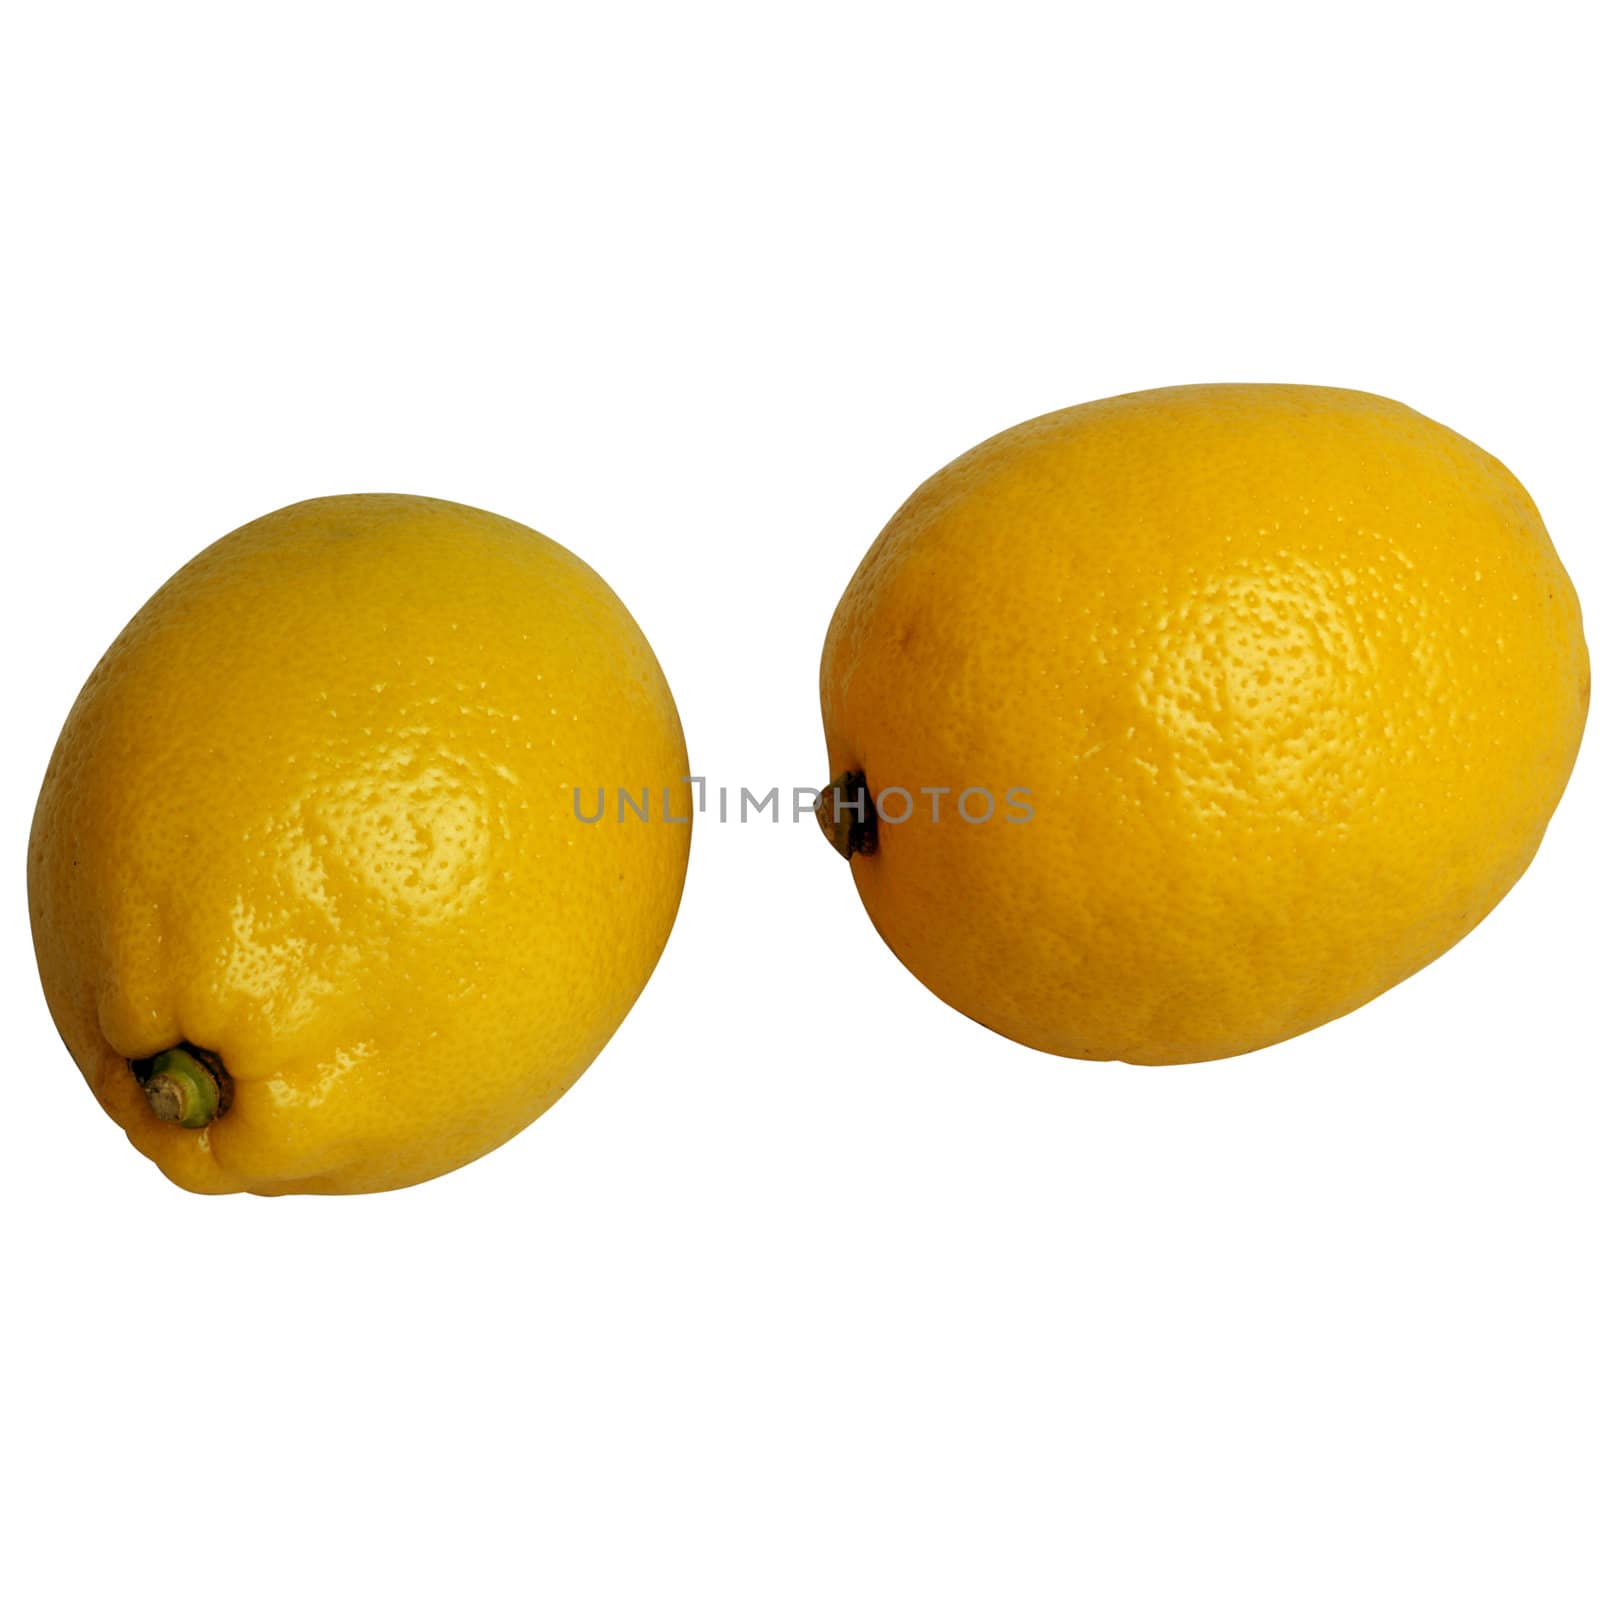 Two lemons by Baltus